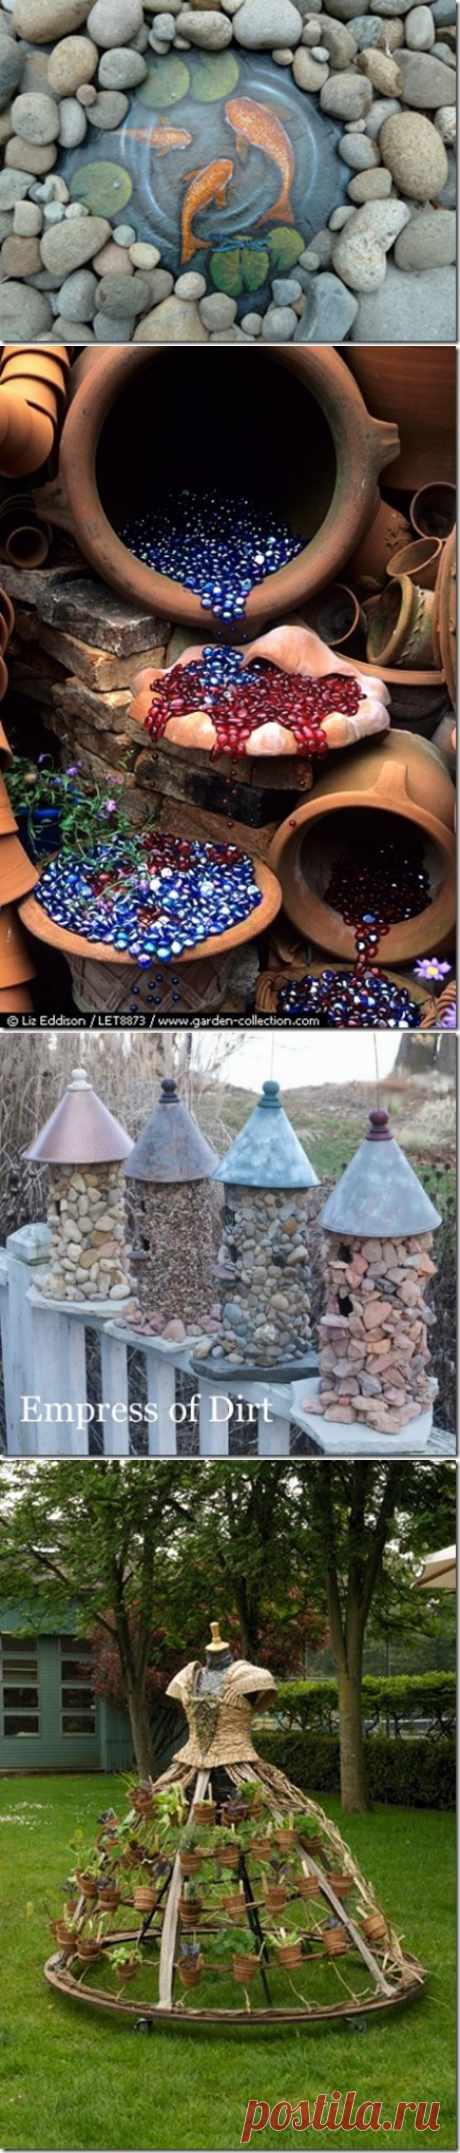 Garden Art - DIY Crafty Projects